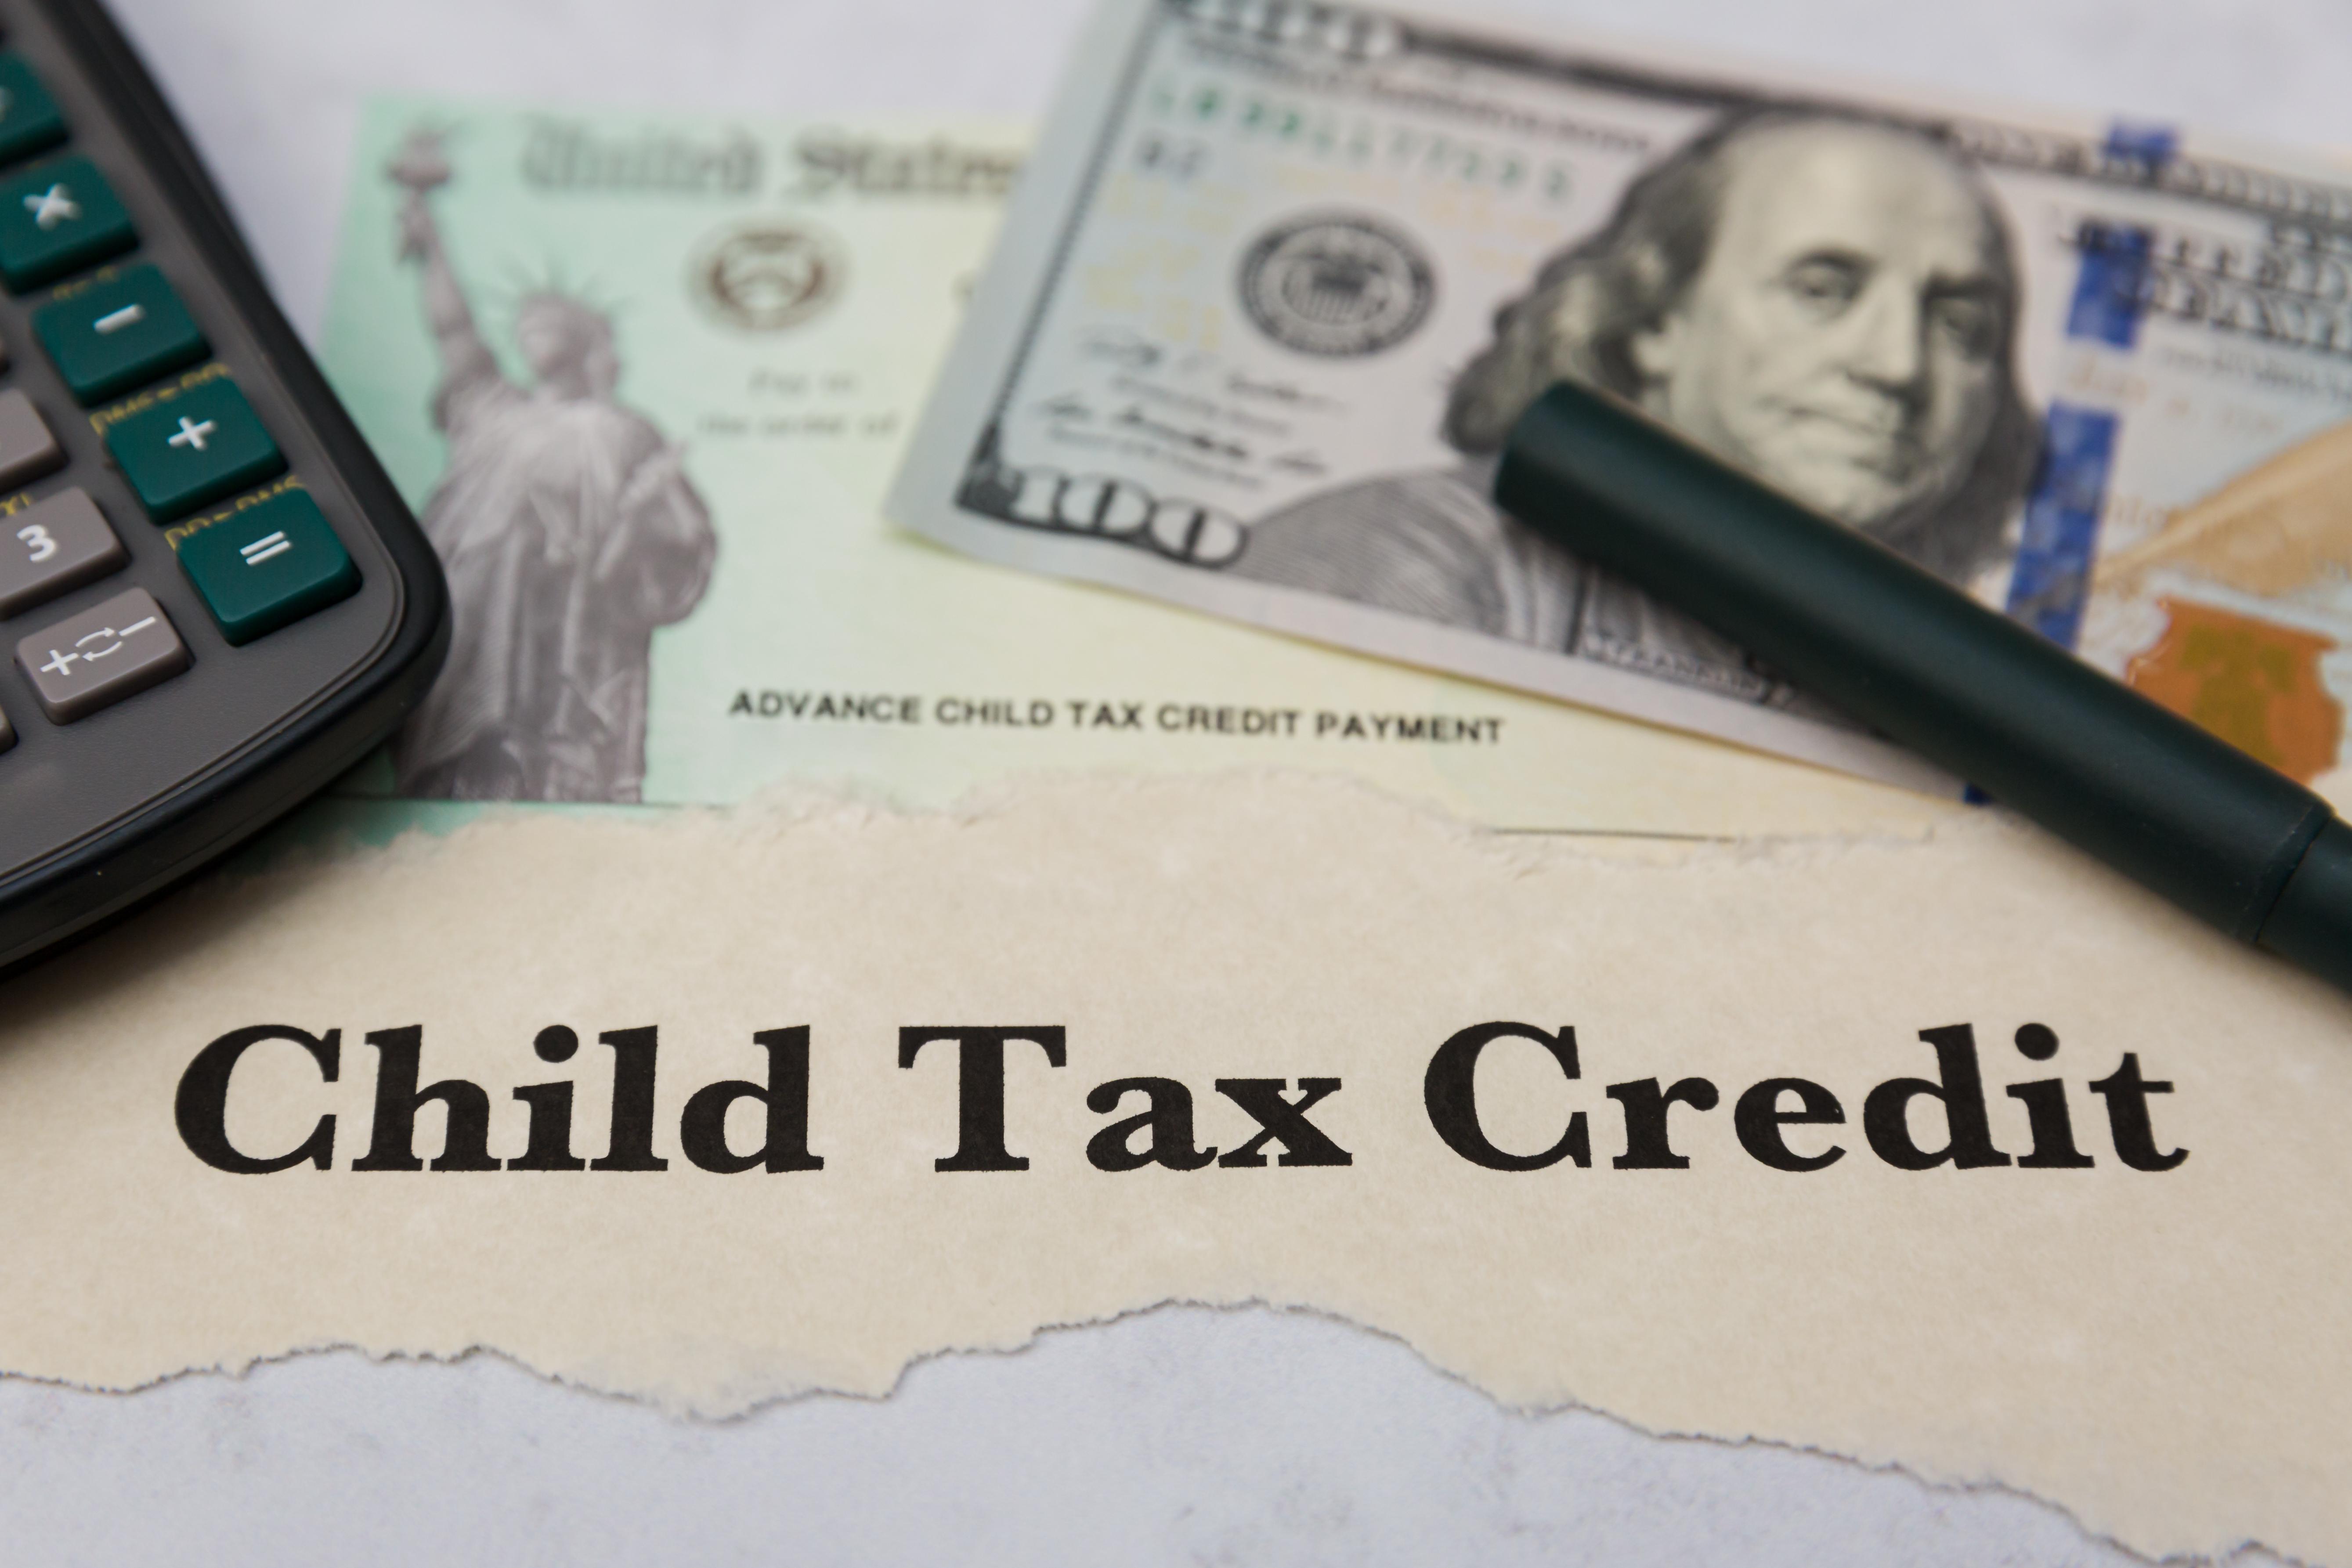 Child Tax Credit - Calculator, Dollar Bill, IRS Check, and Pen